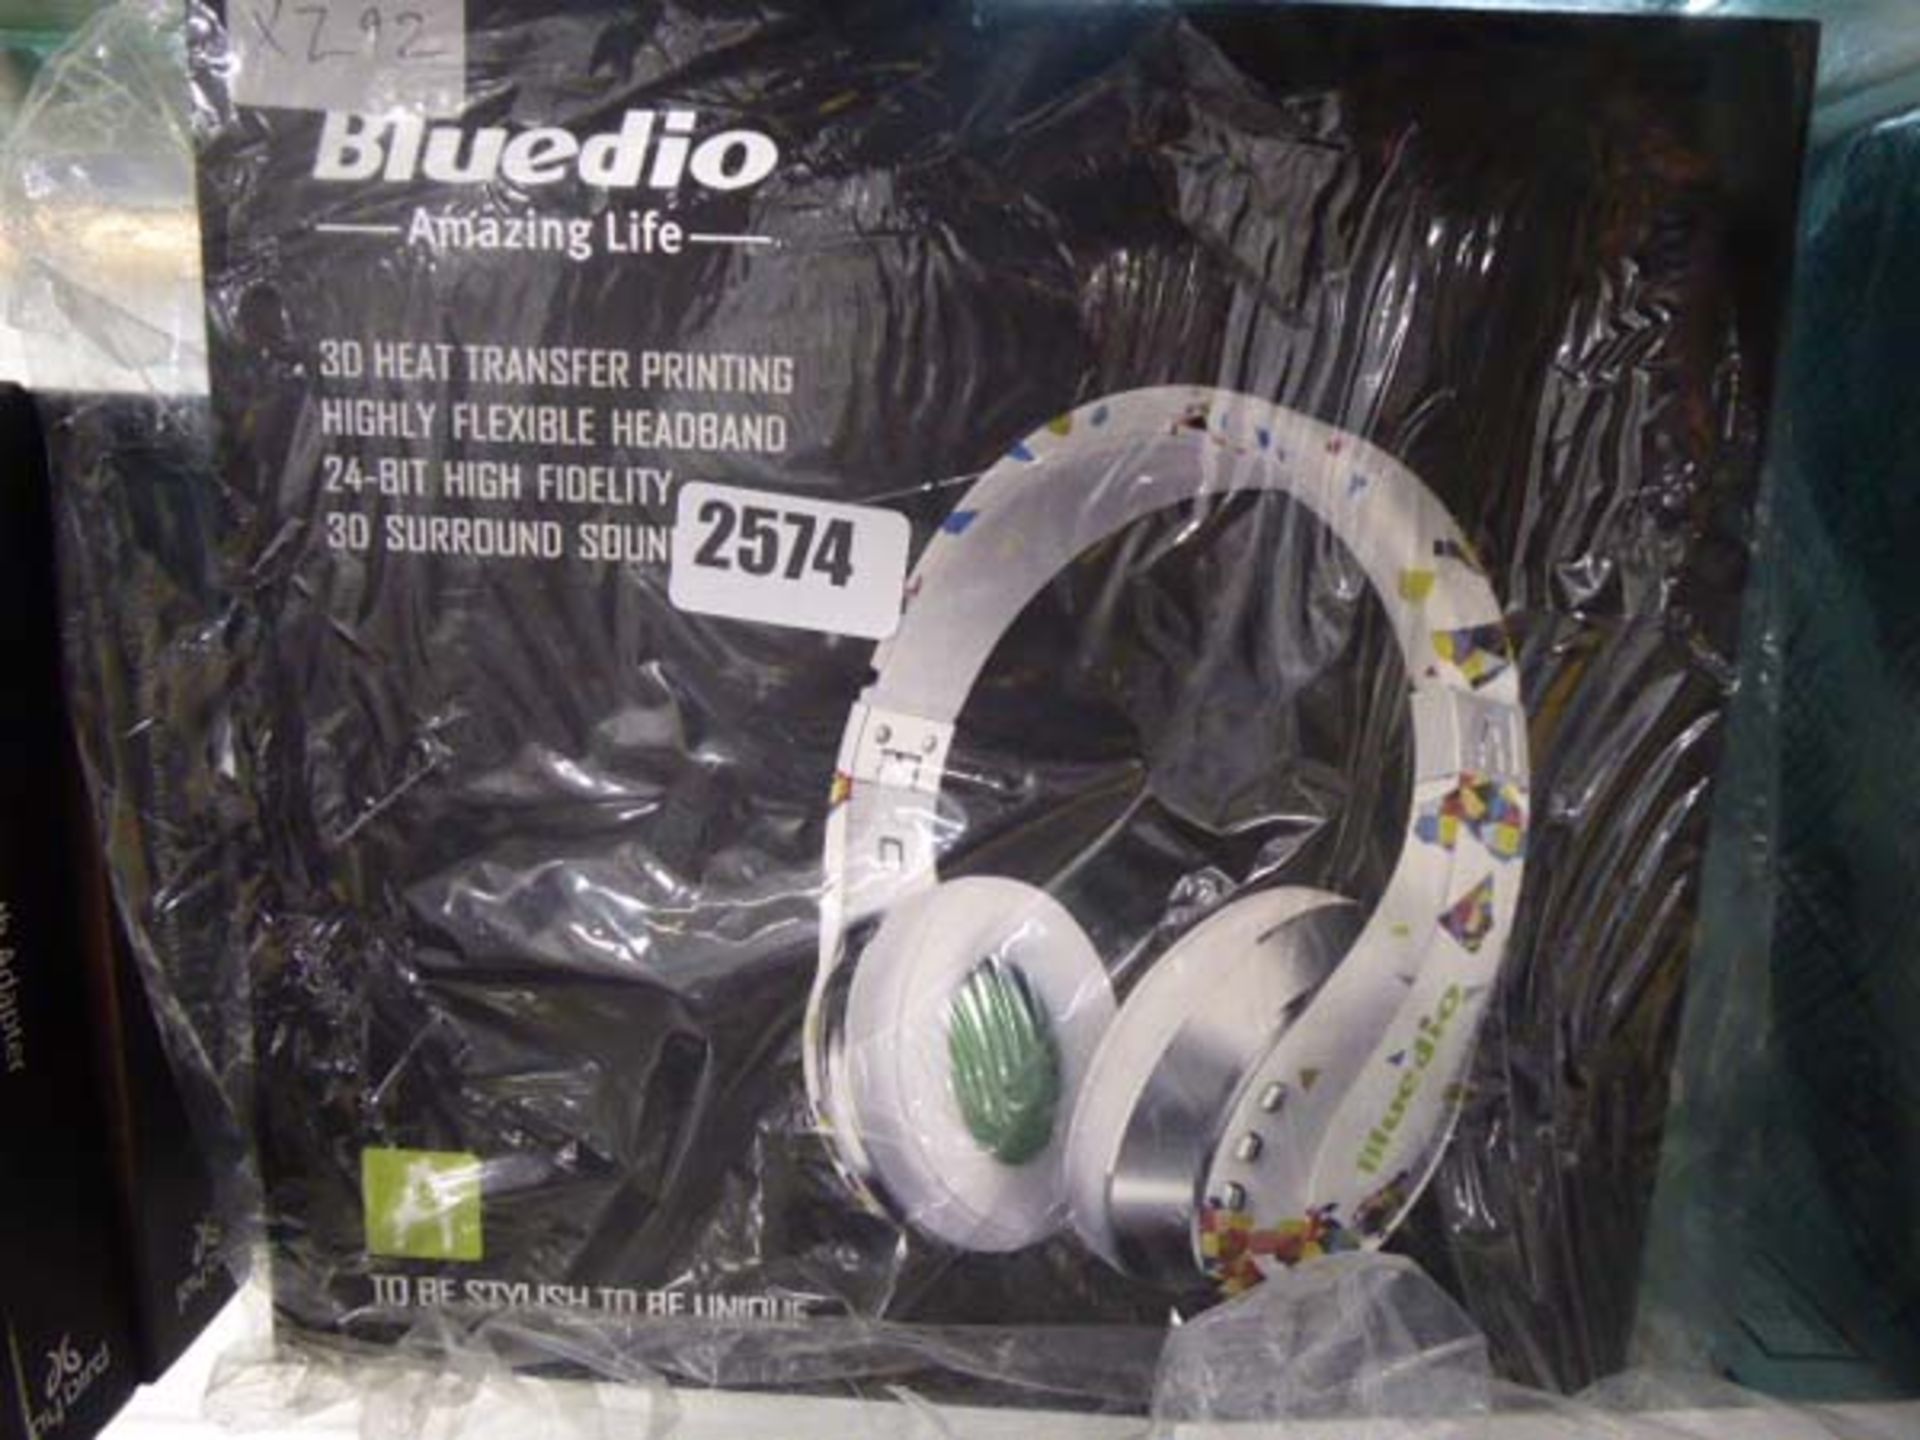 Blue dio bluetooth headset in box